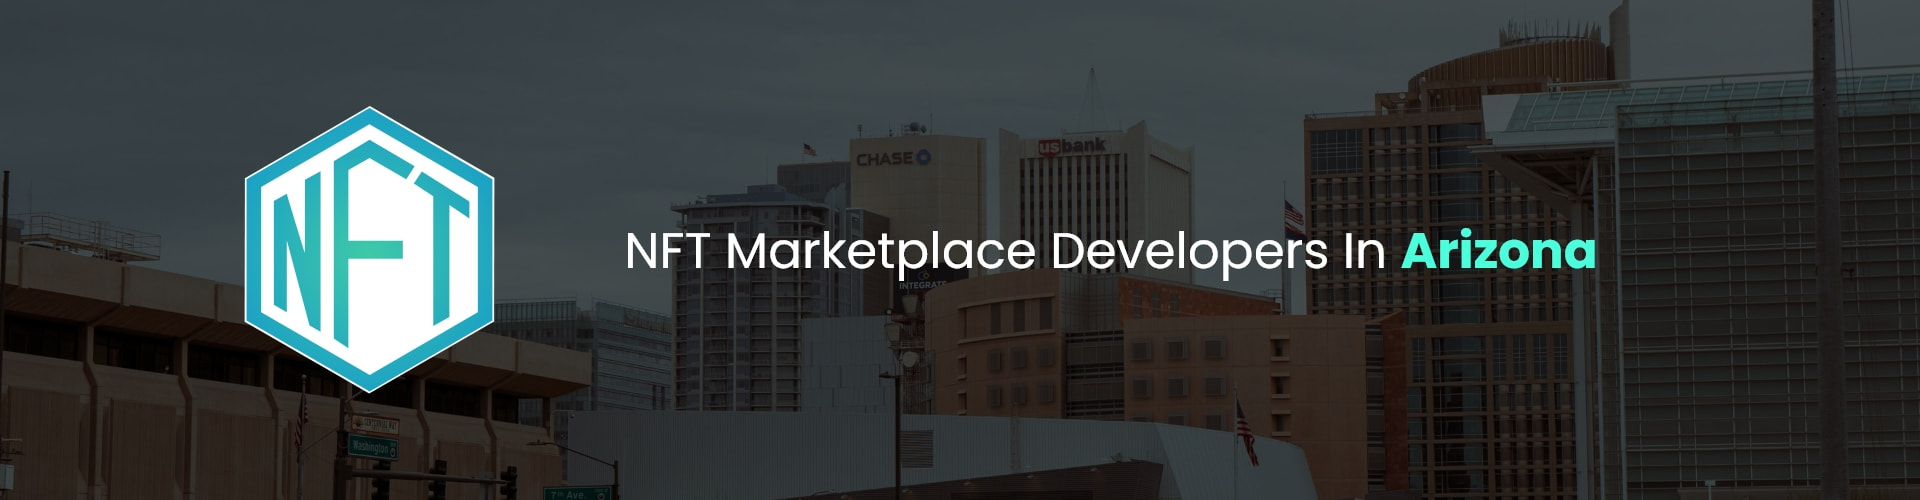 hire nft marketplace developers in arizona